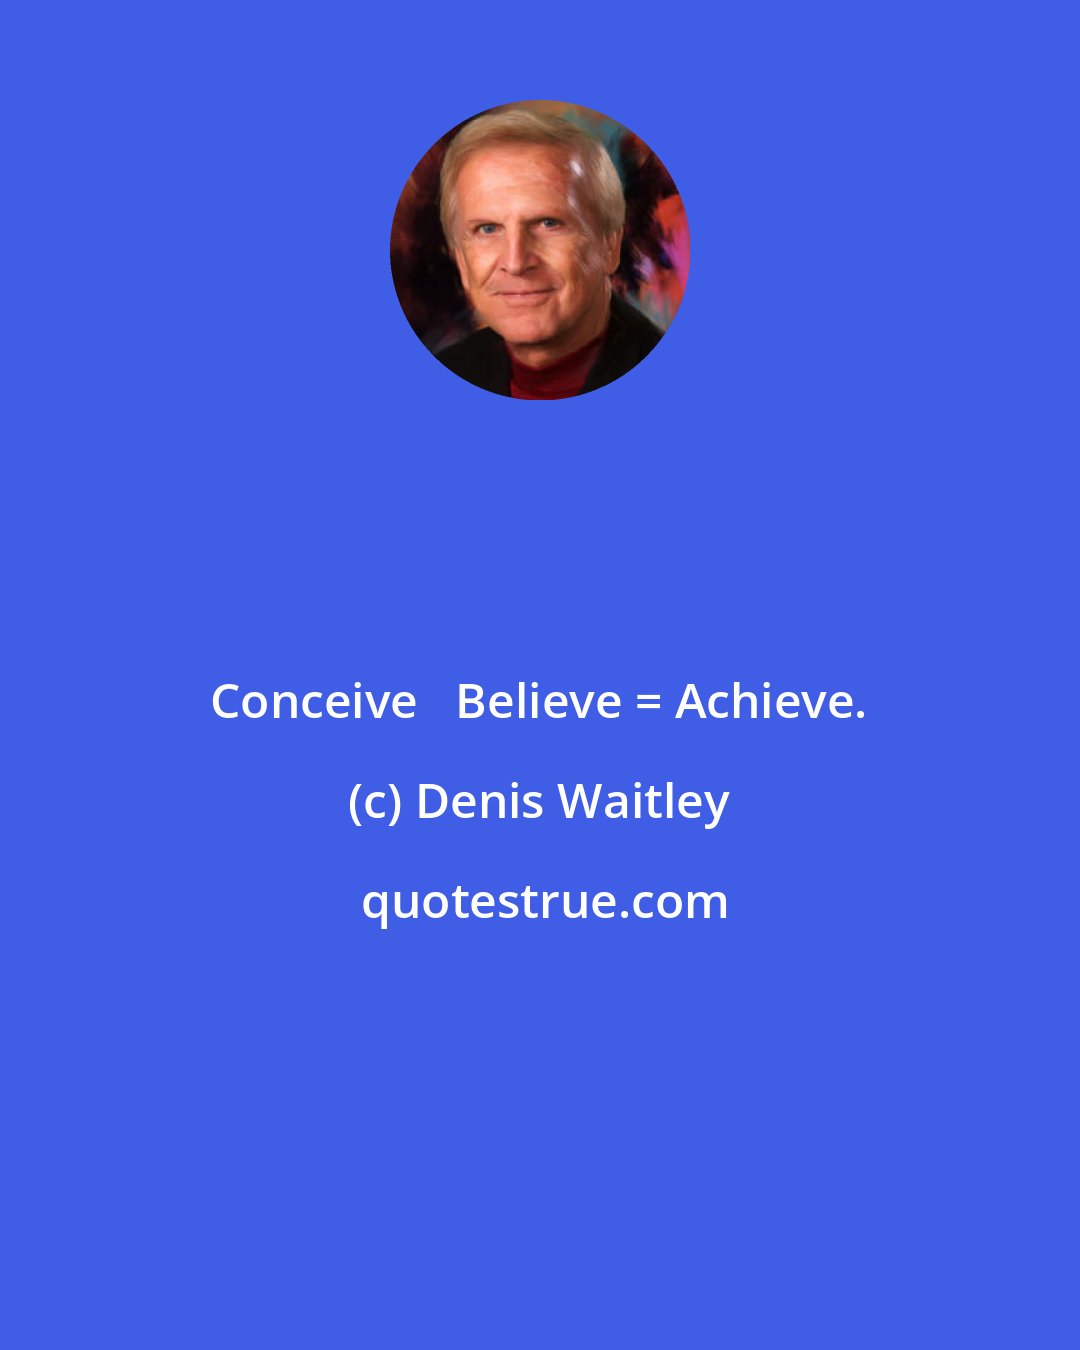 Denis Waitley: Conceive + Believe = Achieve.